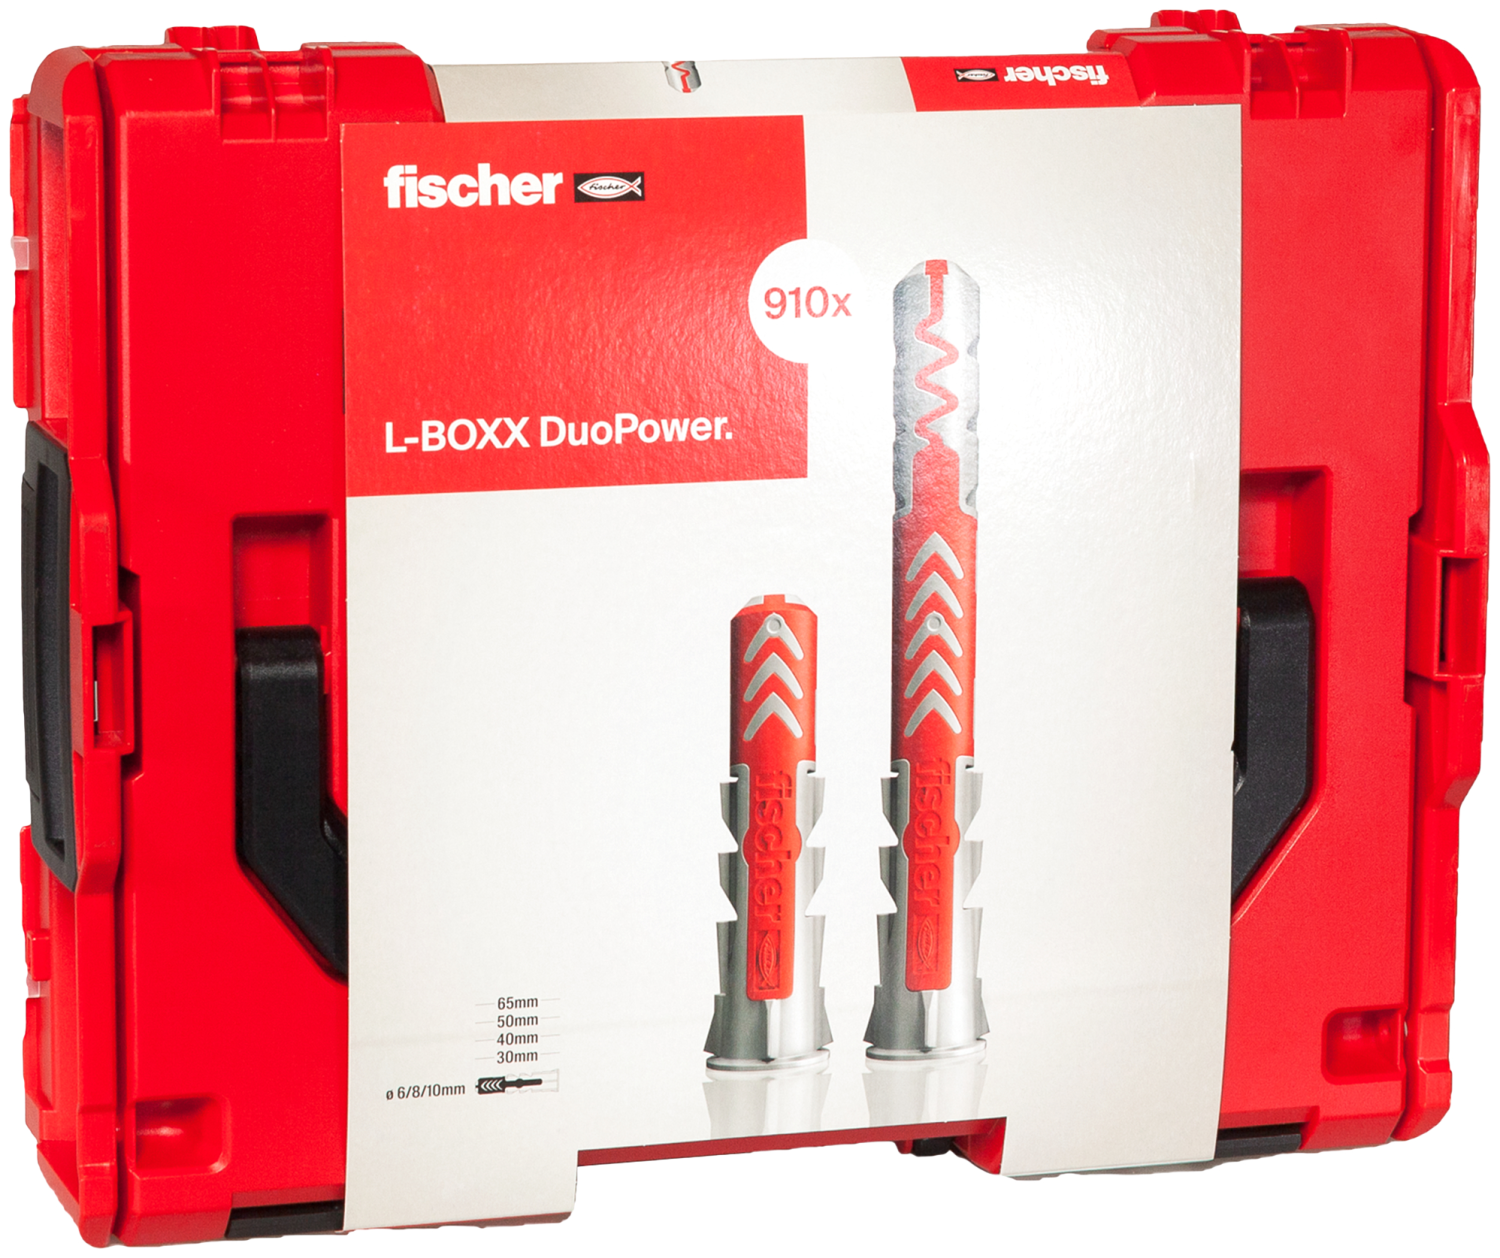 fischer DuoPower L-BOXX 102 910-delige pluggenset in L-Boxx